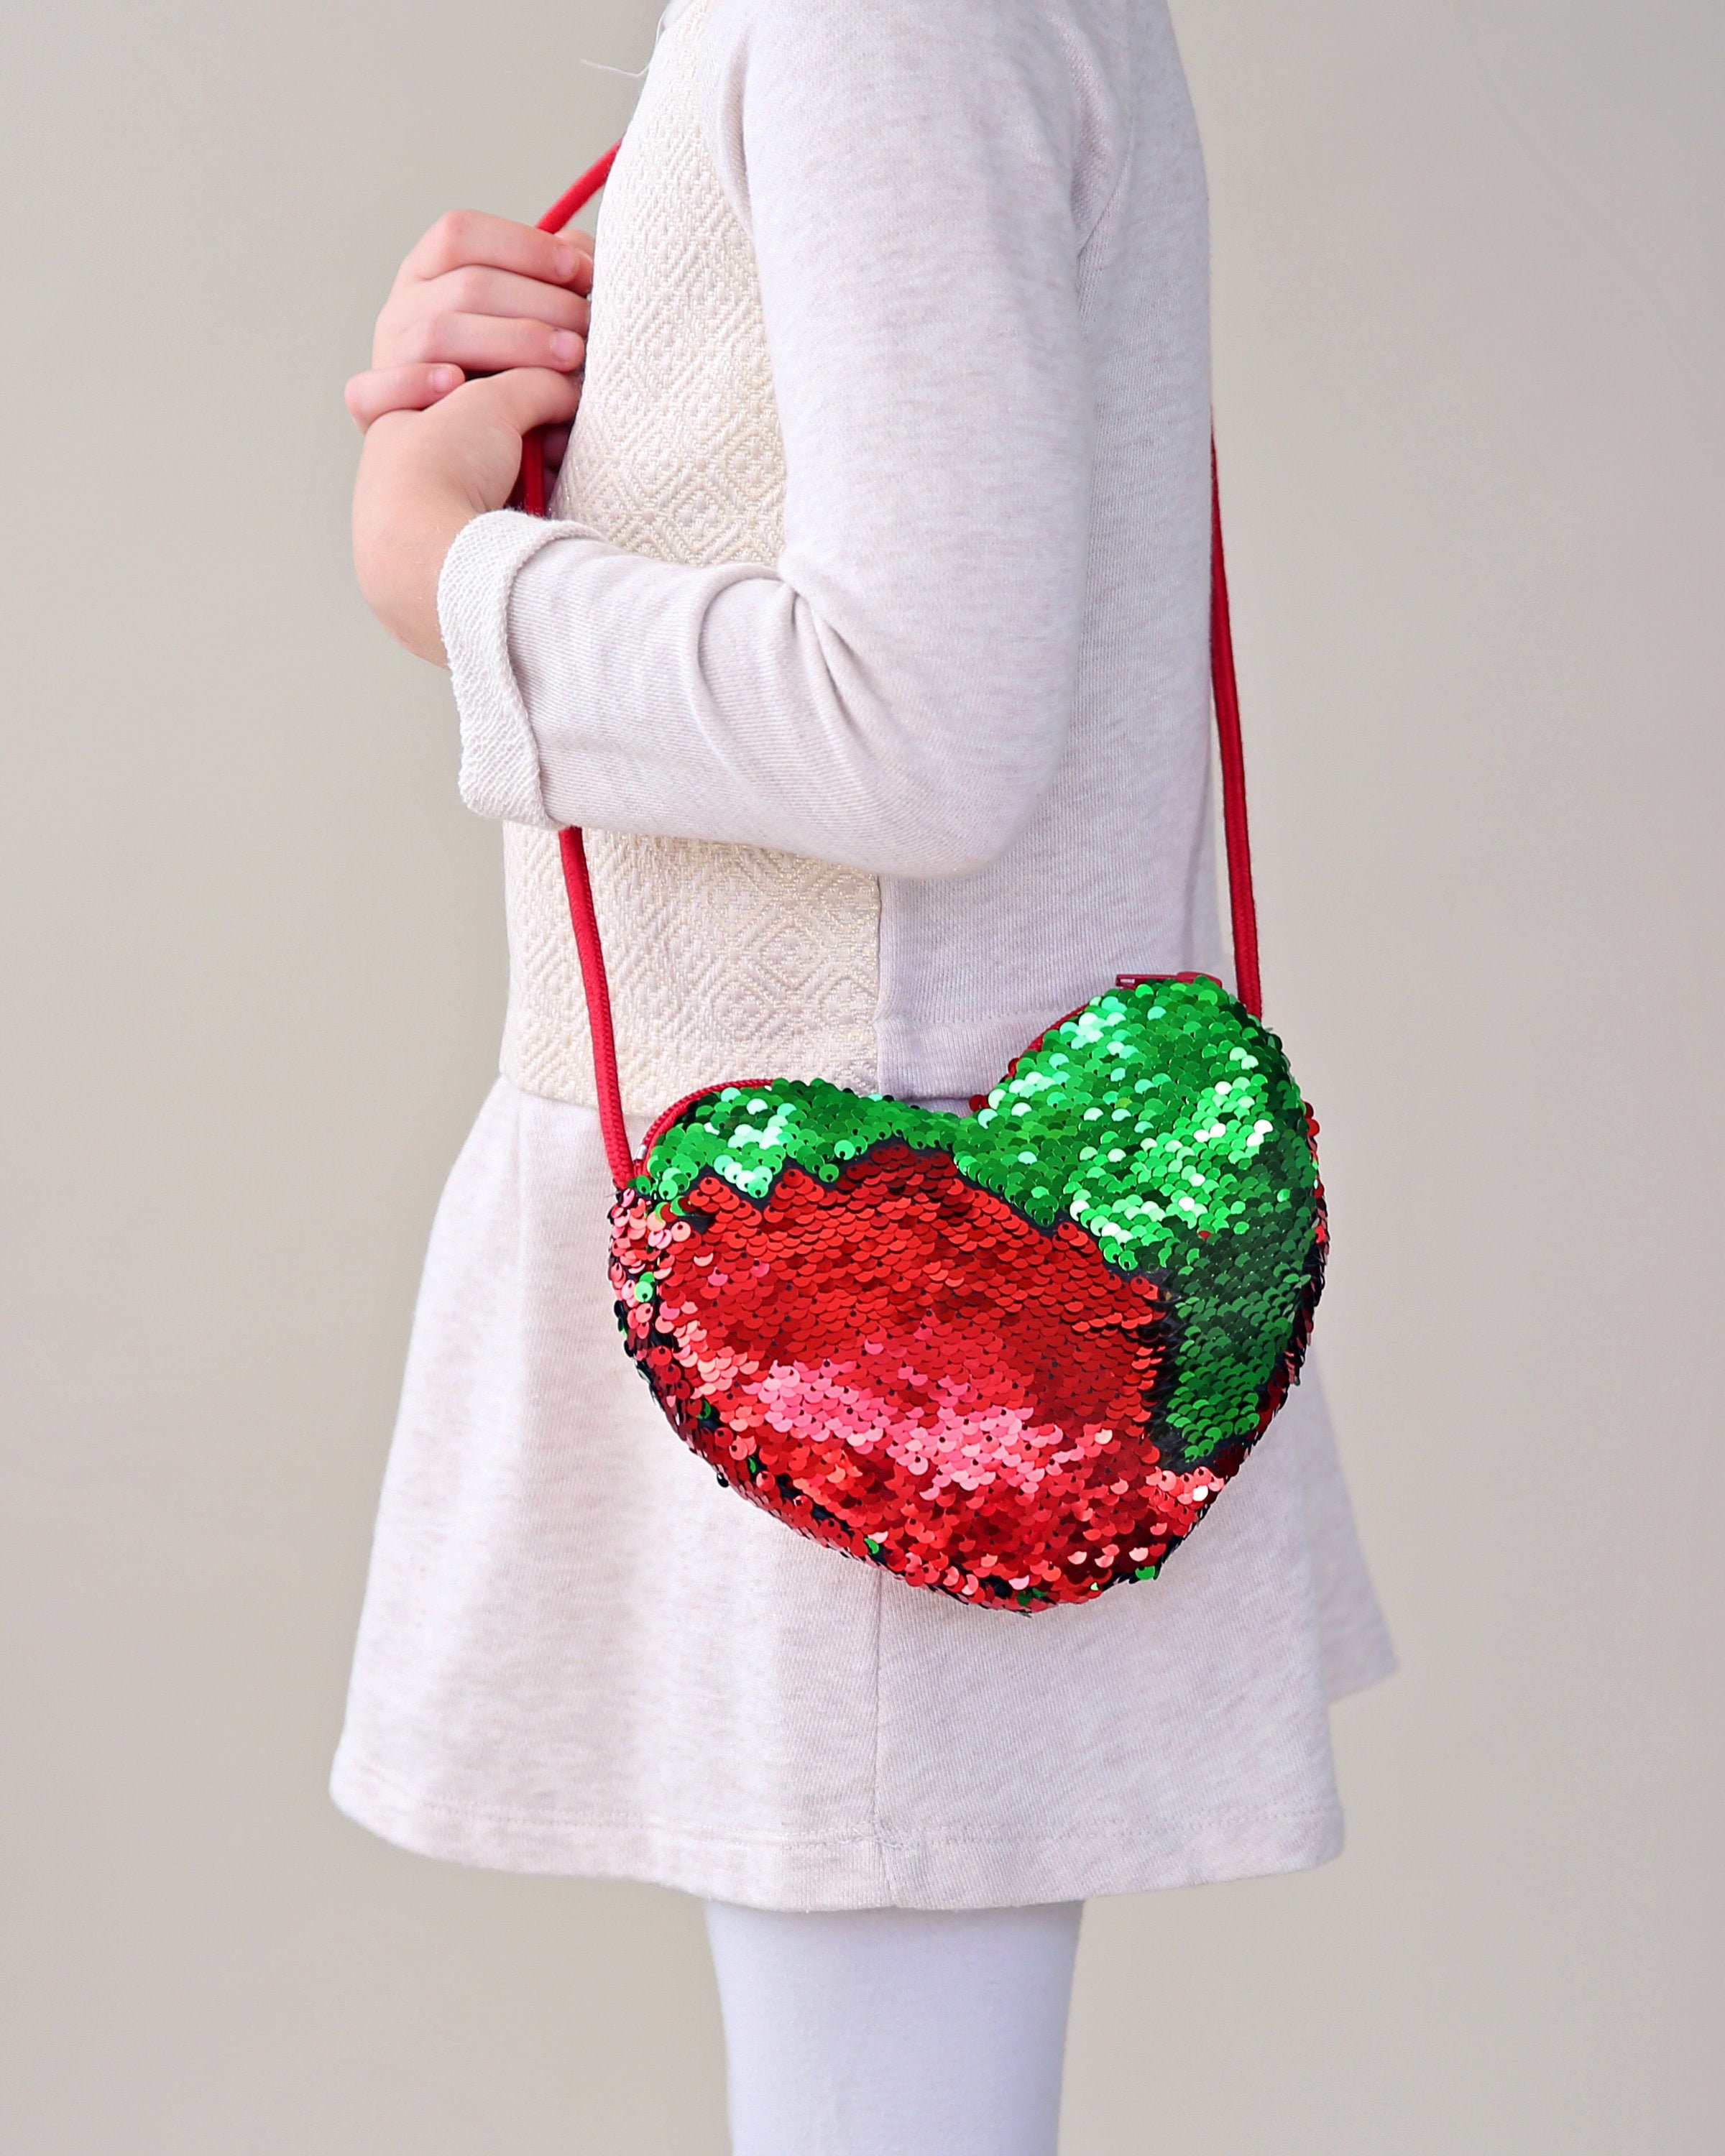 Would you buy a heart shaped bag? : r/handbags